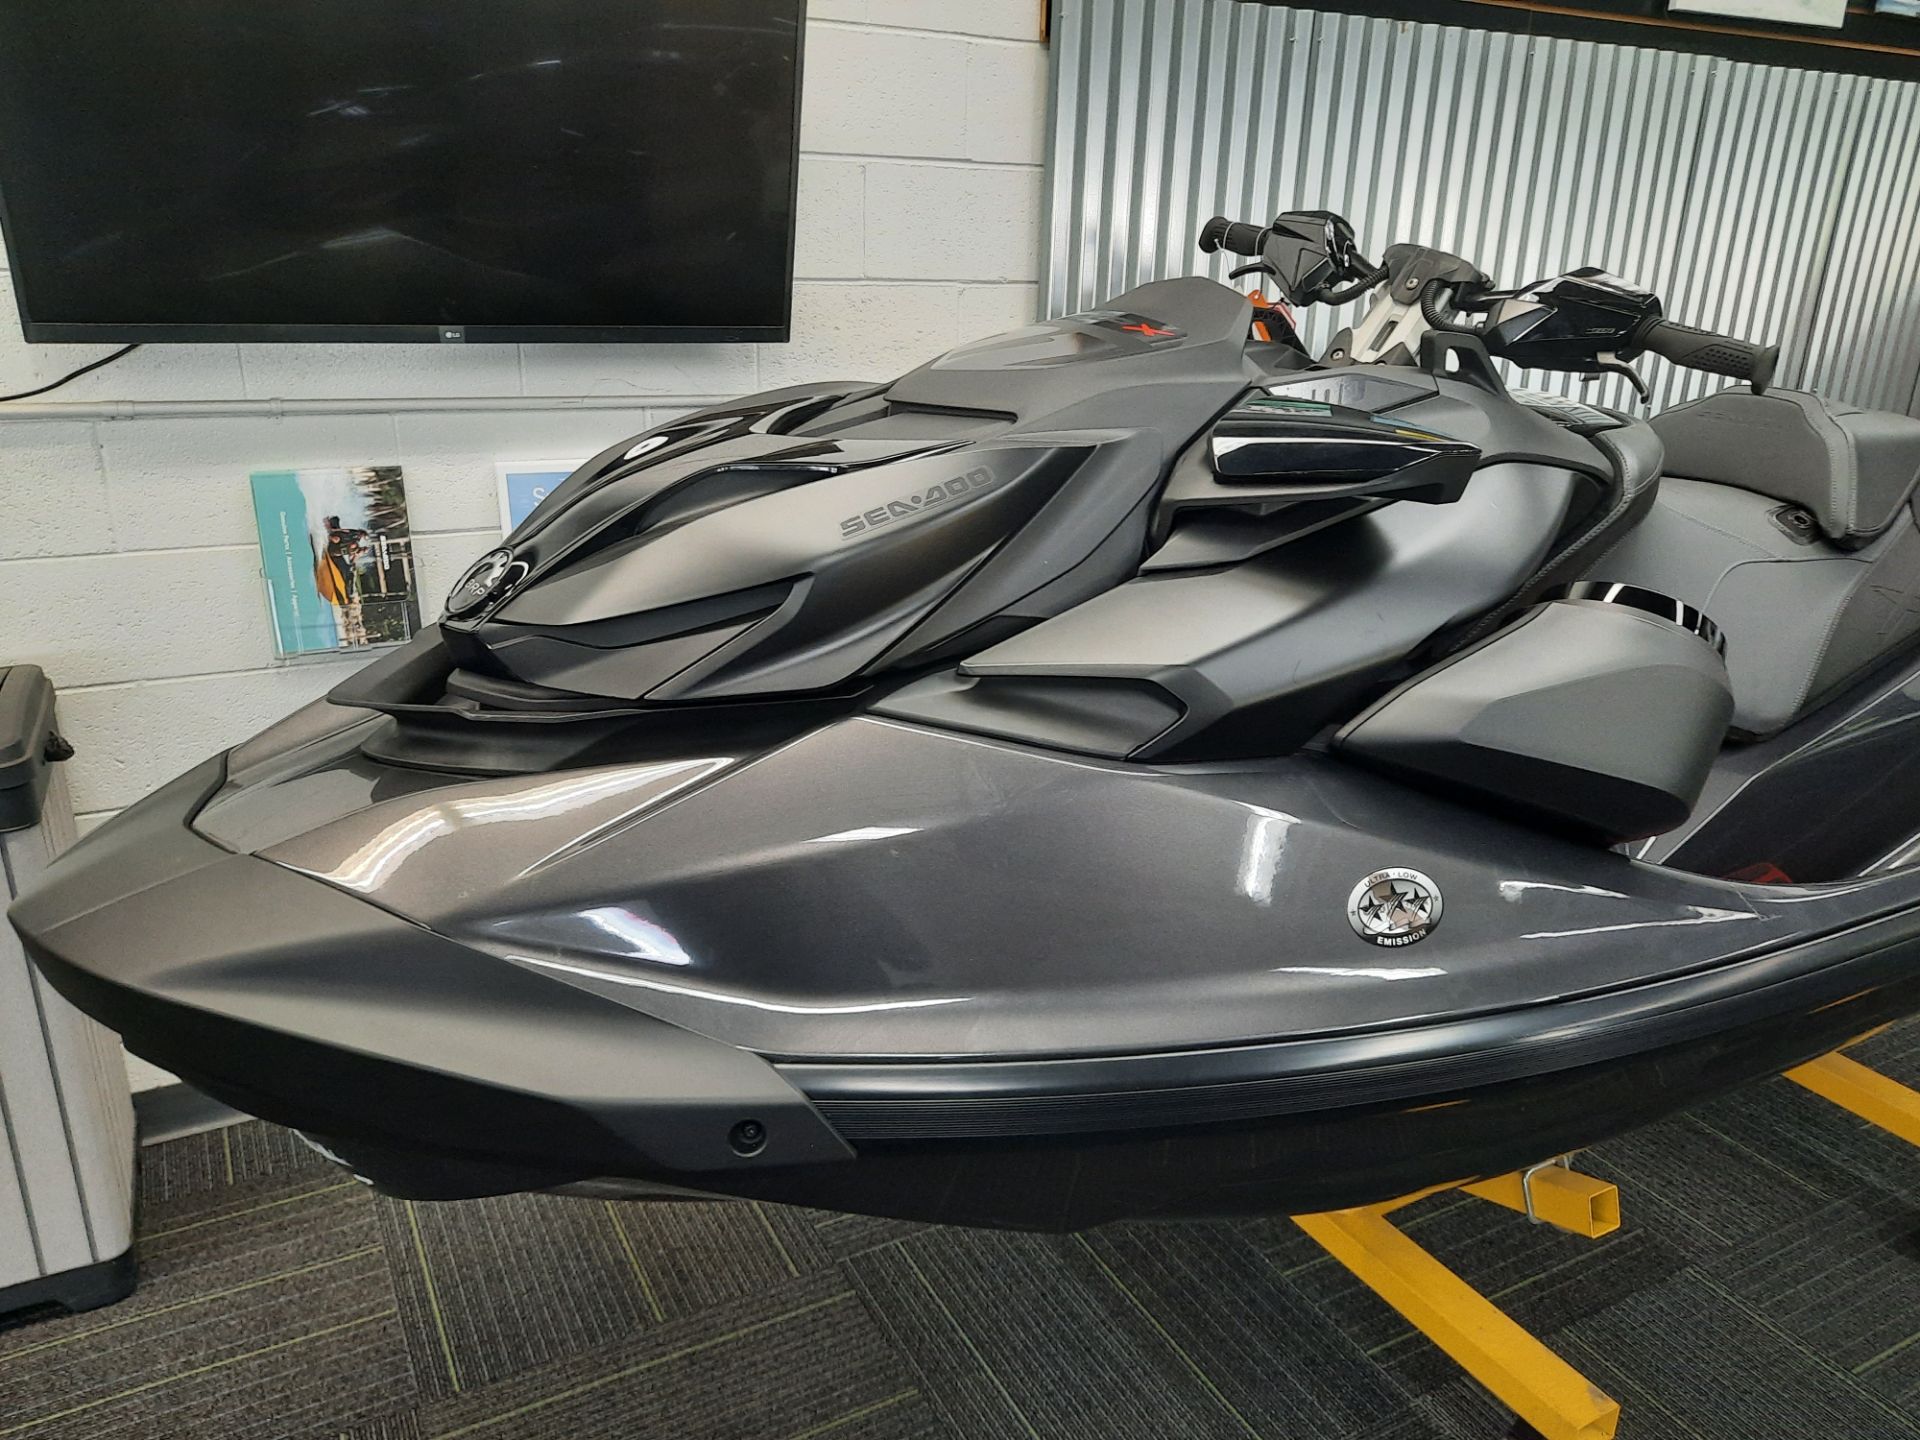 2022 Sea-Doo RXP-X 300 + Tech Package in Ontario, California - Photo 7